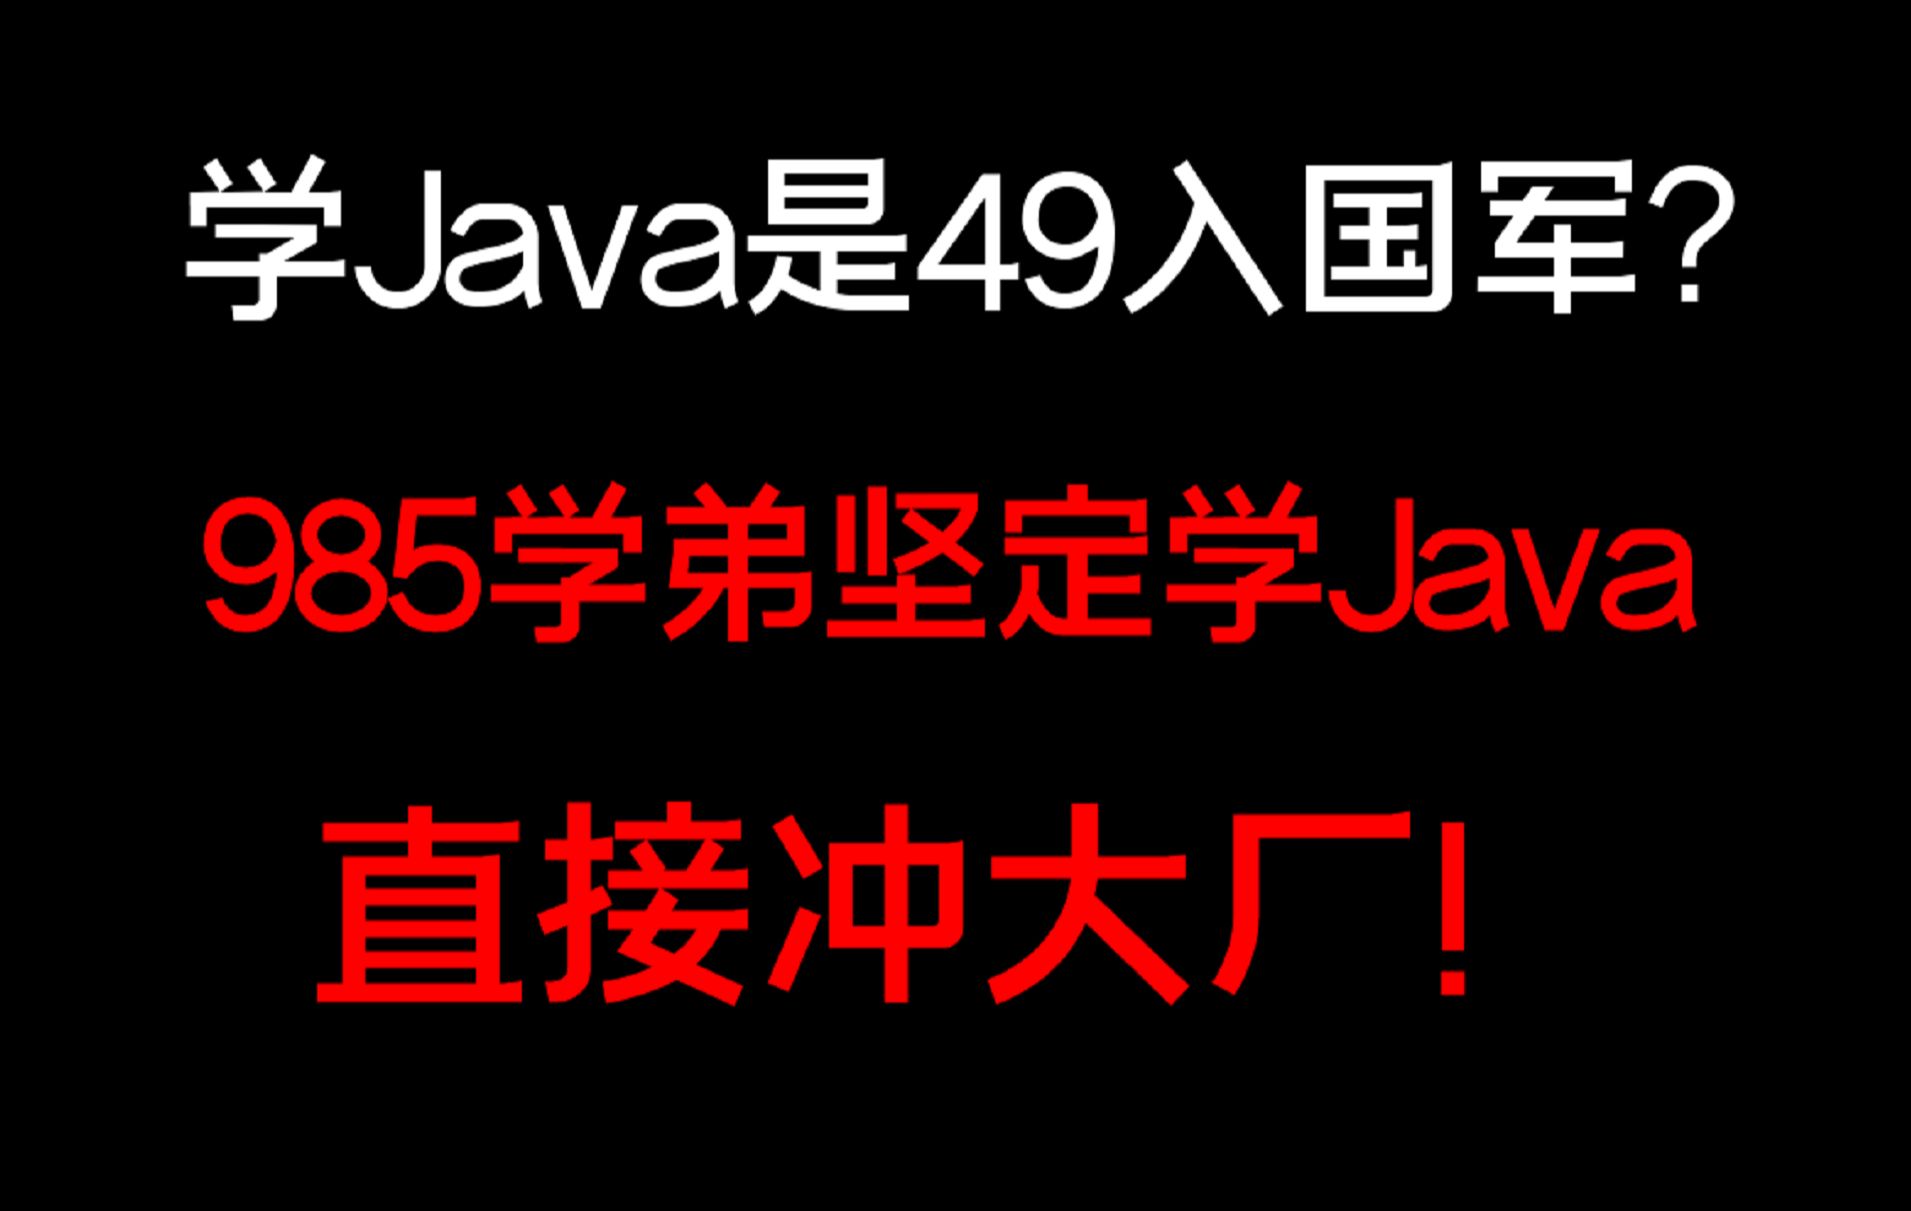 Java都凉透了还学Java？985靓仔坚定学Java，冲大厂！